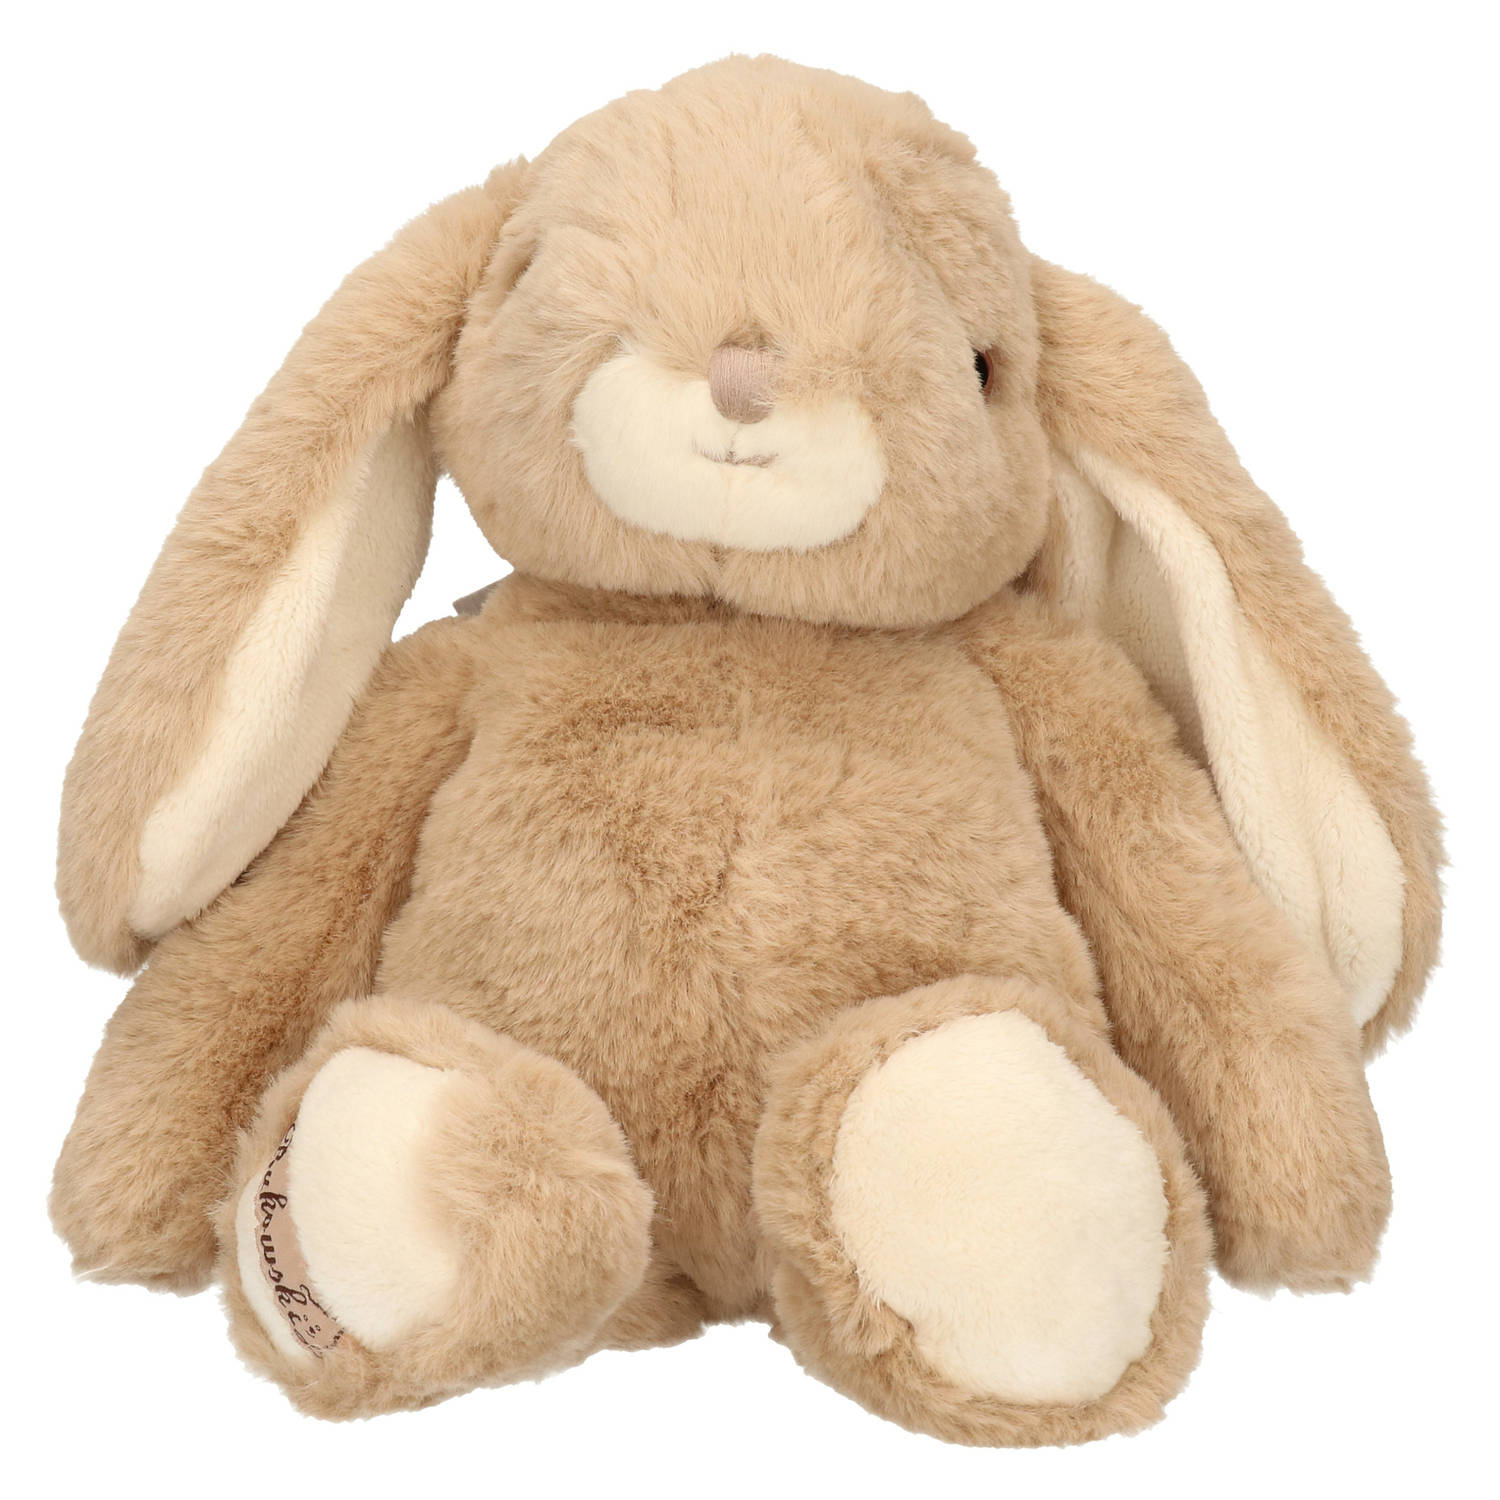 Bukowski pluche konijn knuffeldier - lichtbruin - staand - 25 cm - Luxe kwaliteit knuffels